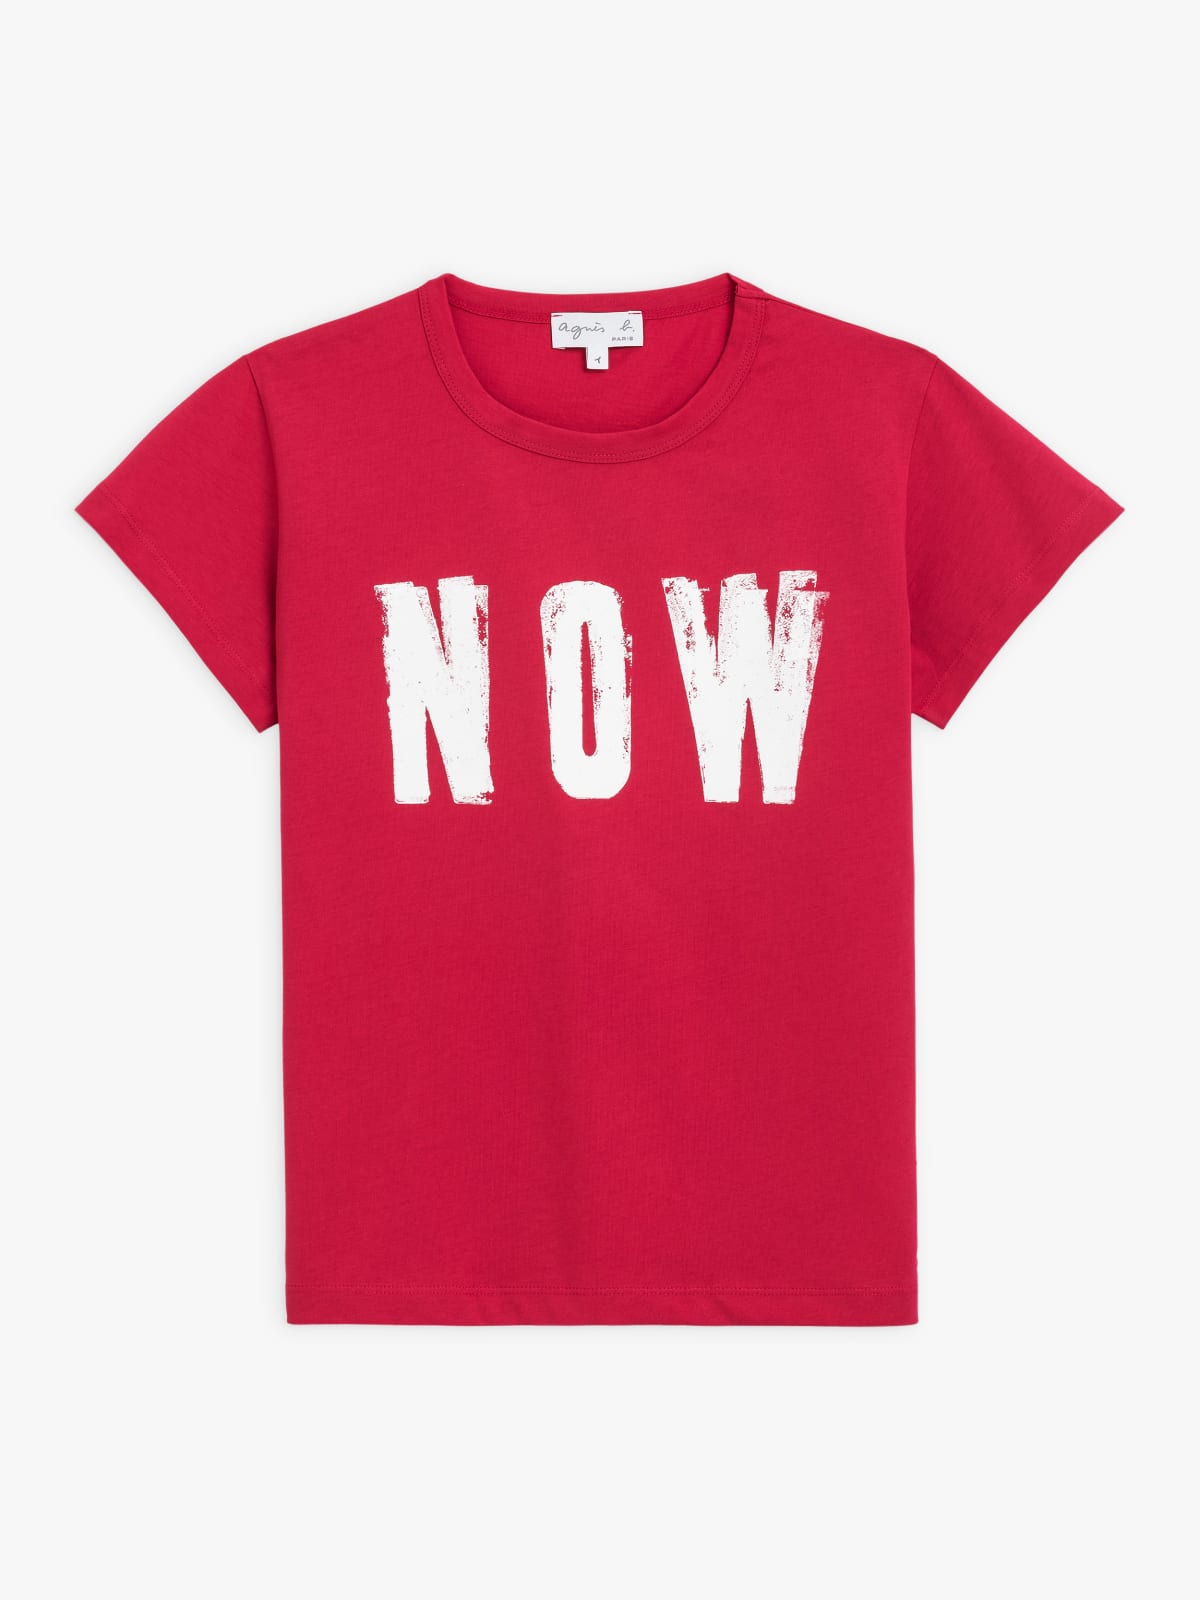 pink Rafael Gray artist "Now" Brando t-shirt